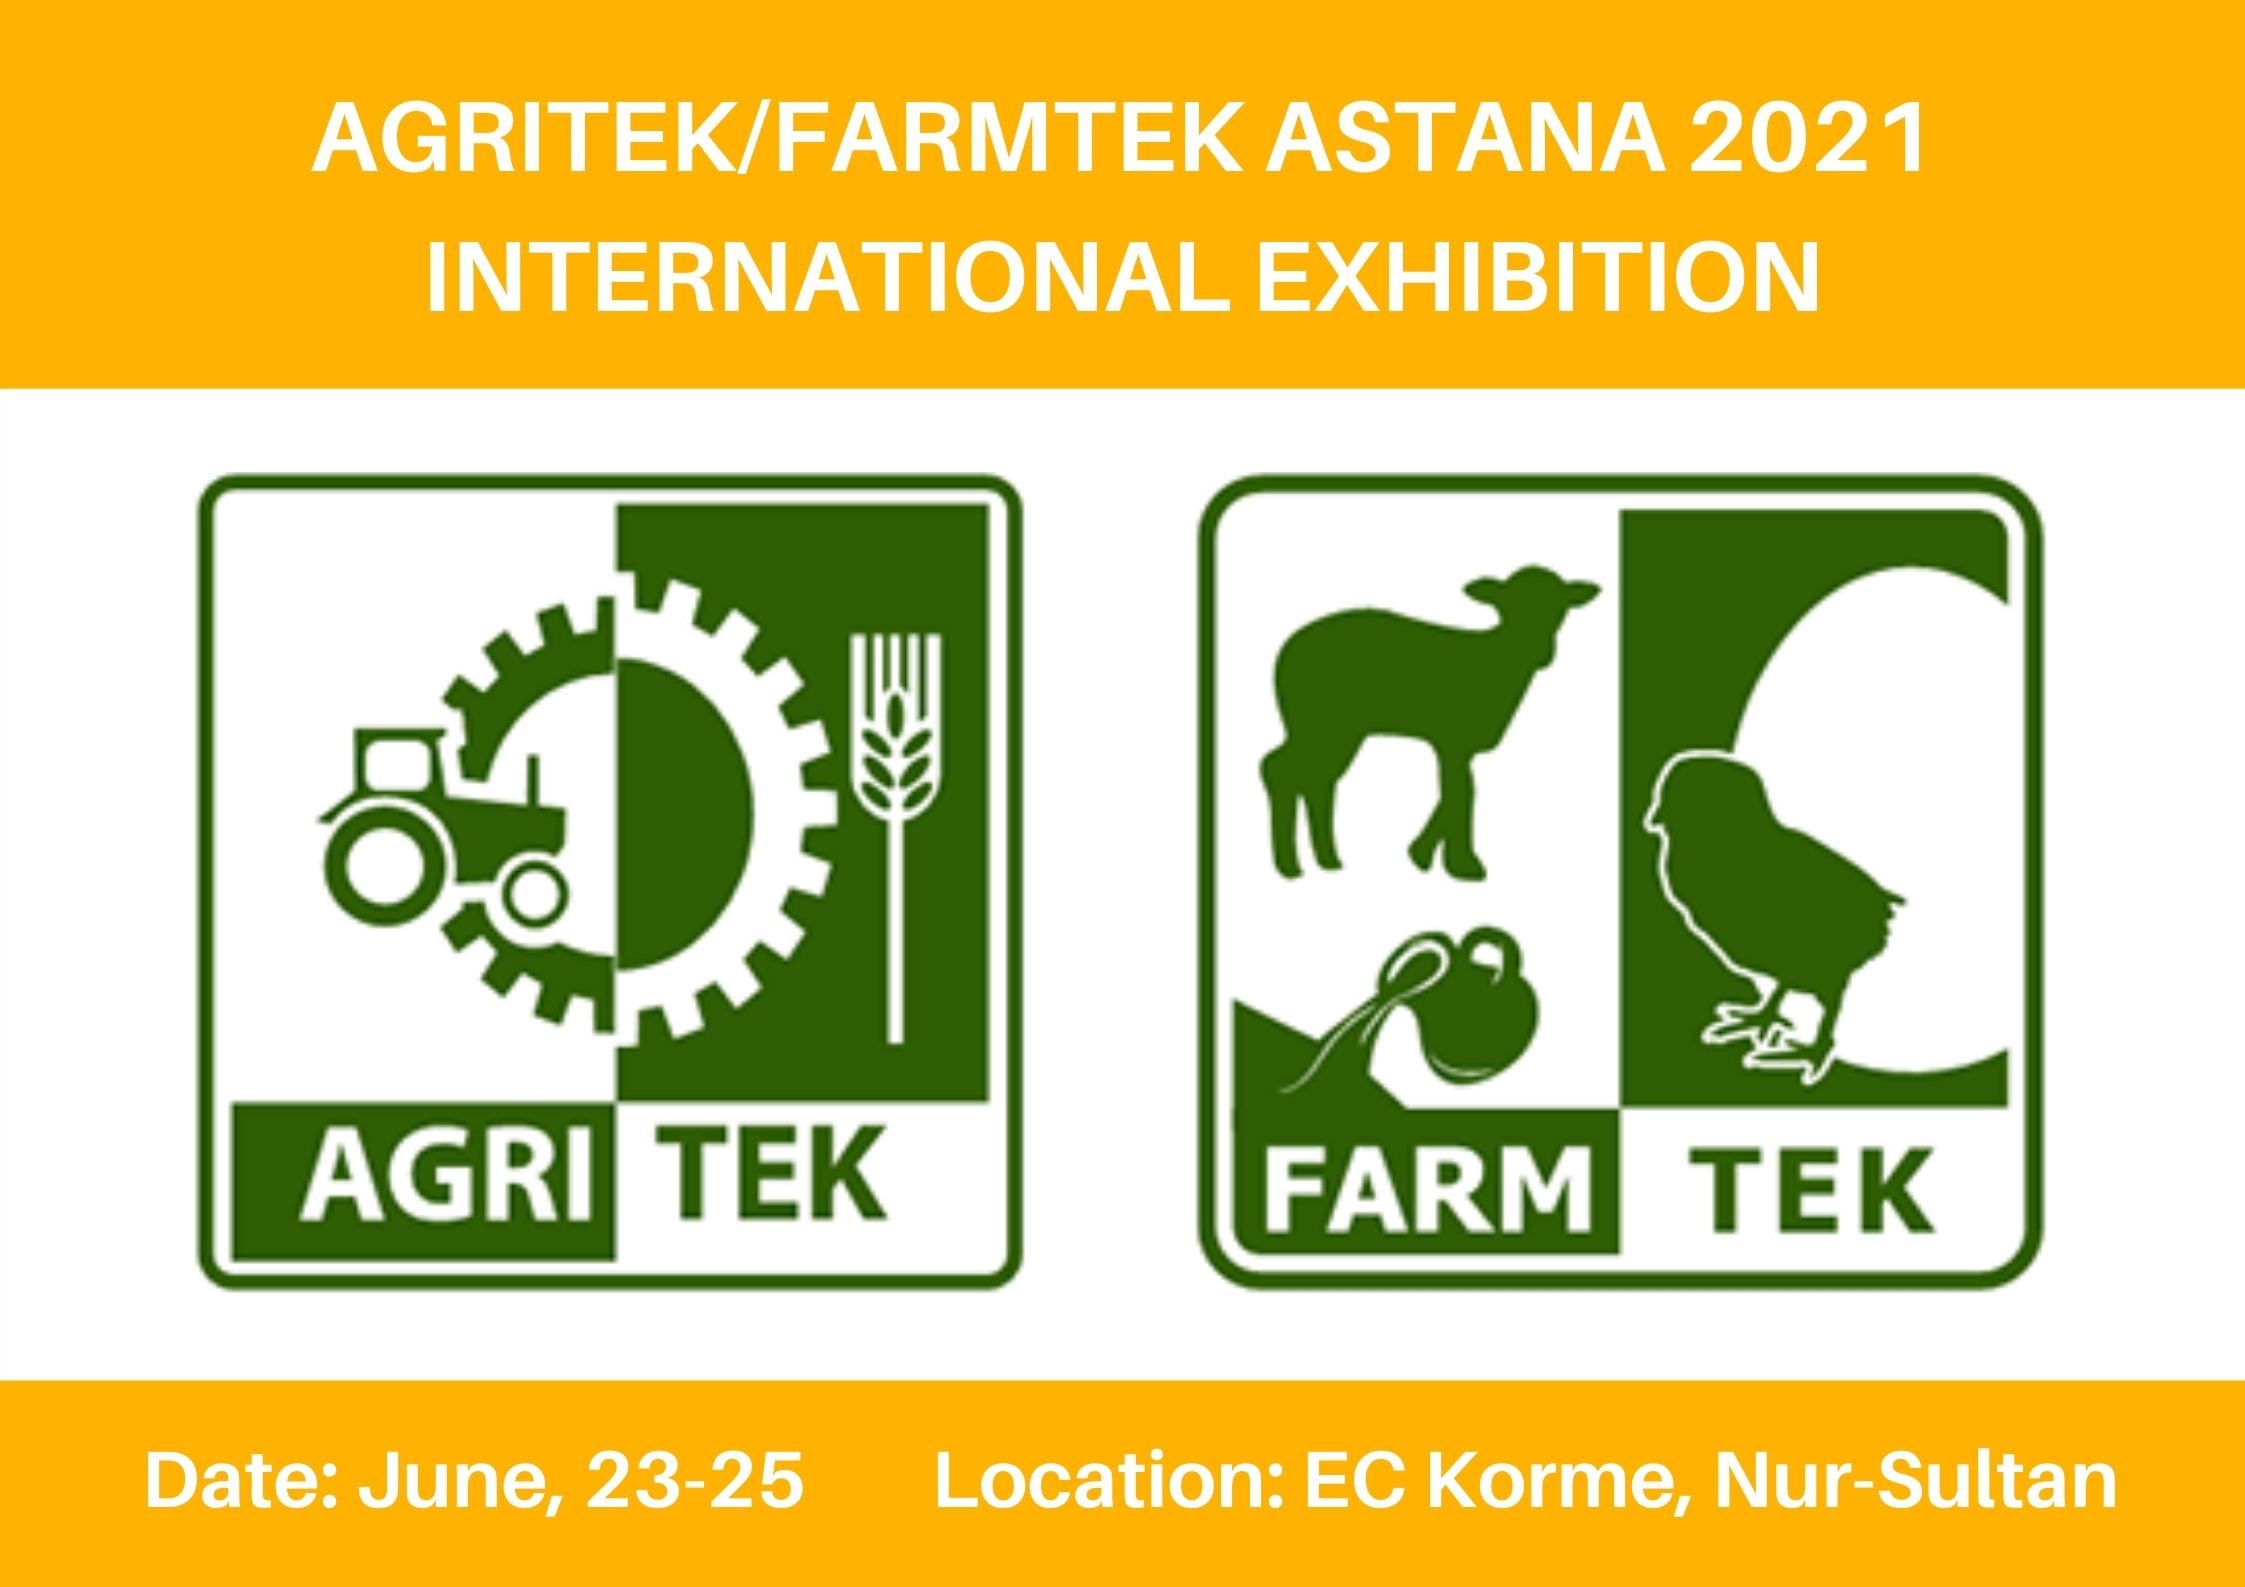 AGRITEK/FARMTEK ASTANA 2021, the 16th INTERNATIONAL EXHIBITION for AGRICULTURE, HORTICULTURE, ANIMAL HUSBANDRY & STOCK BREEDING